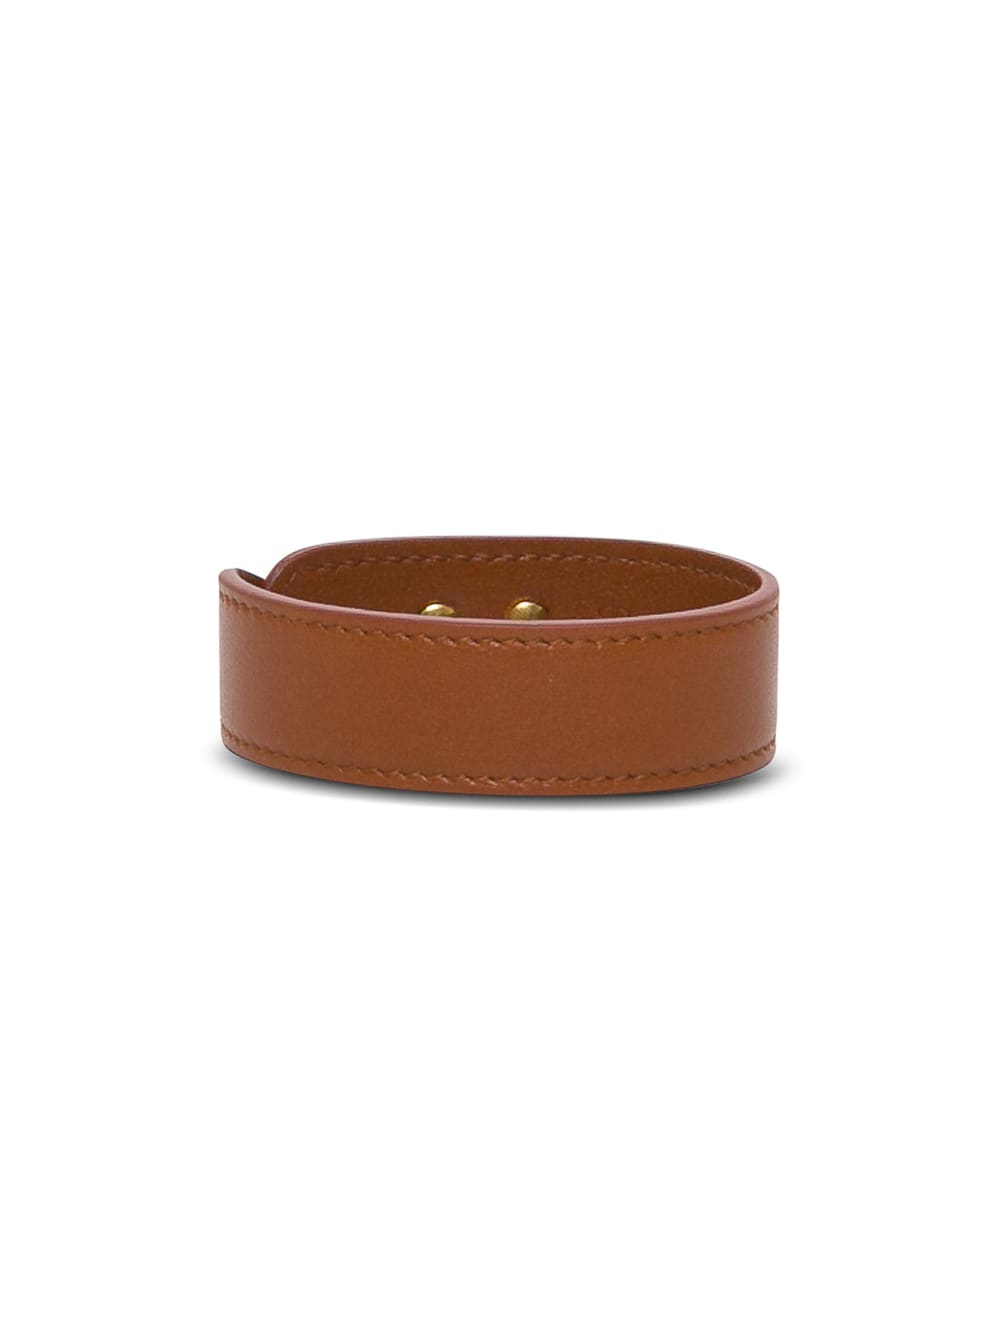 Valentino Garavani Brown Leather Bracelet With Stud Detail